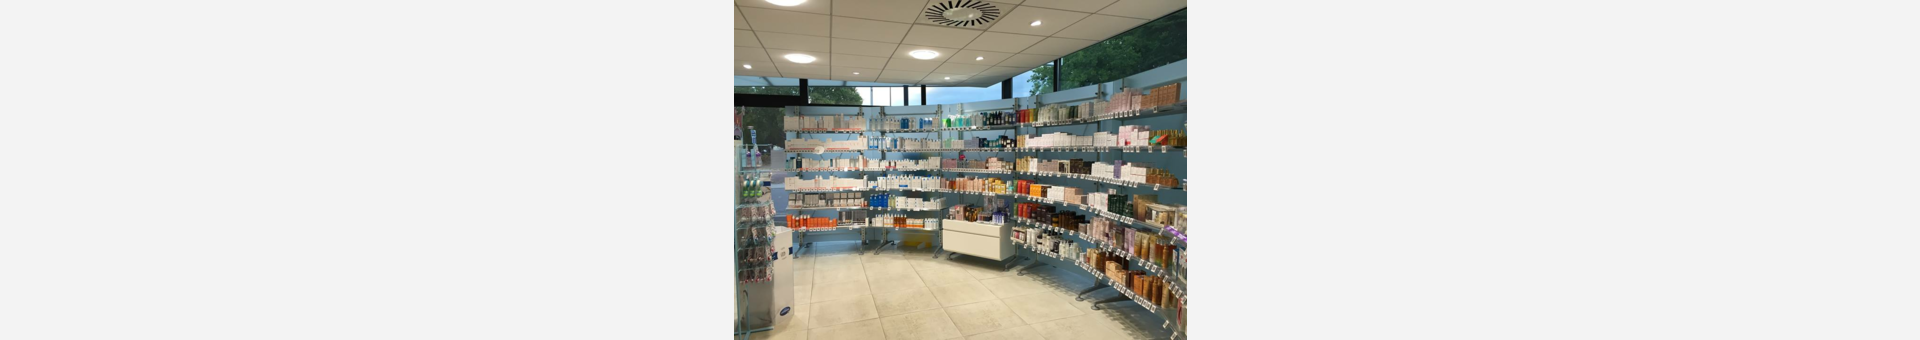 Pharmacie De La Marne,Libourne